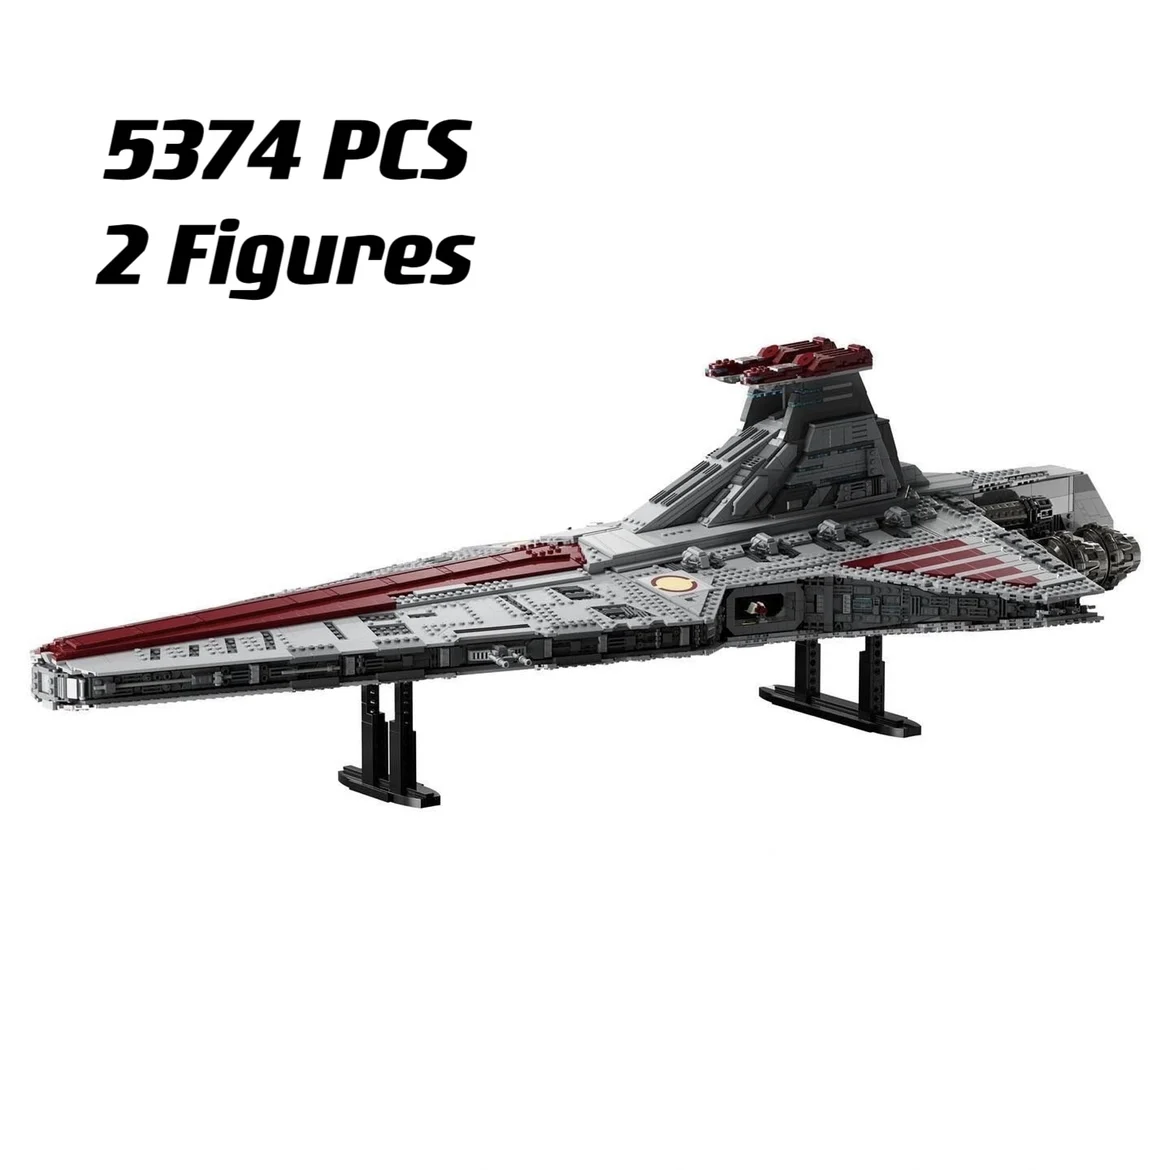 

Moc 75367 Venator Class Republic Attacks Cruiser Model Building Set Block Space Toys For Boy Adult Christmas Gifts 5374pcs